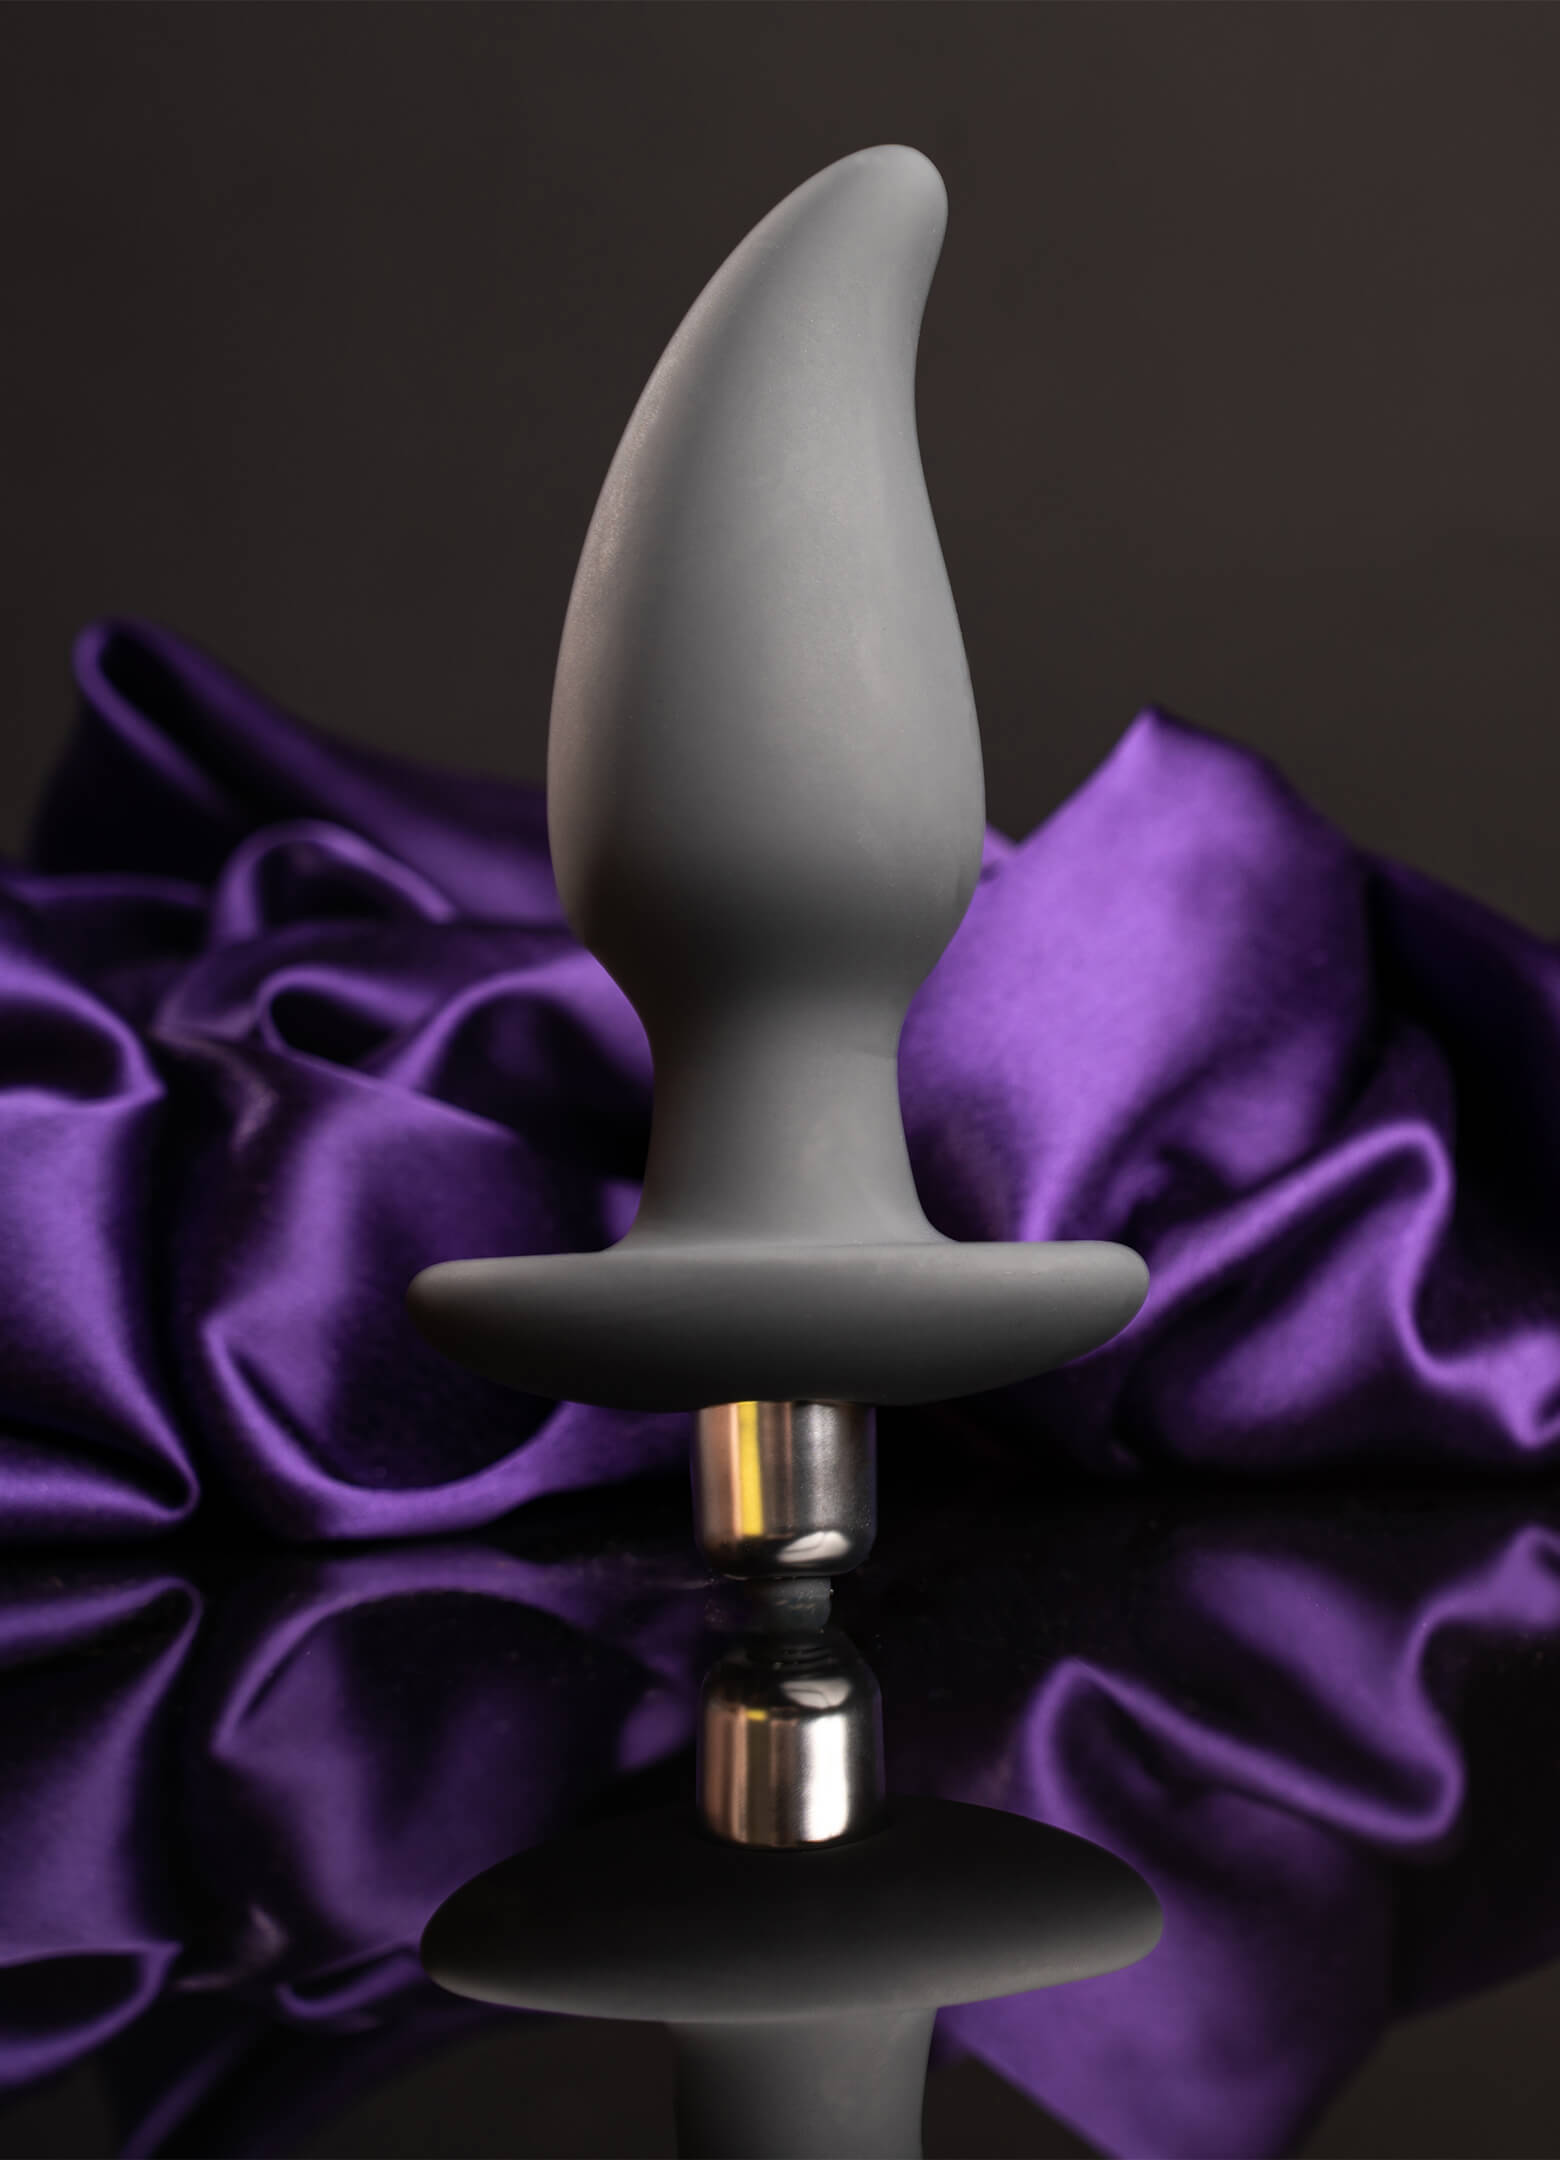 Grey pear shaped butt plug housing a removable bullet vibrator.